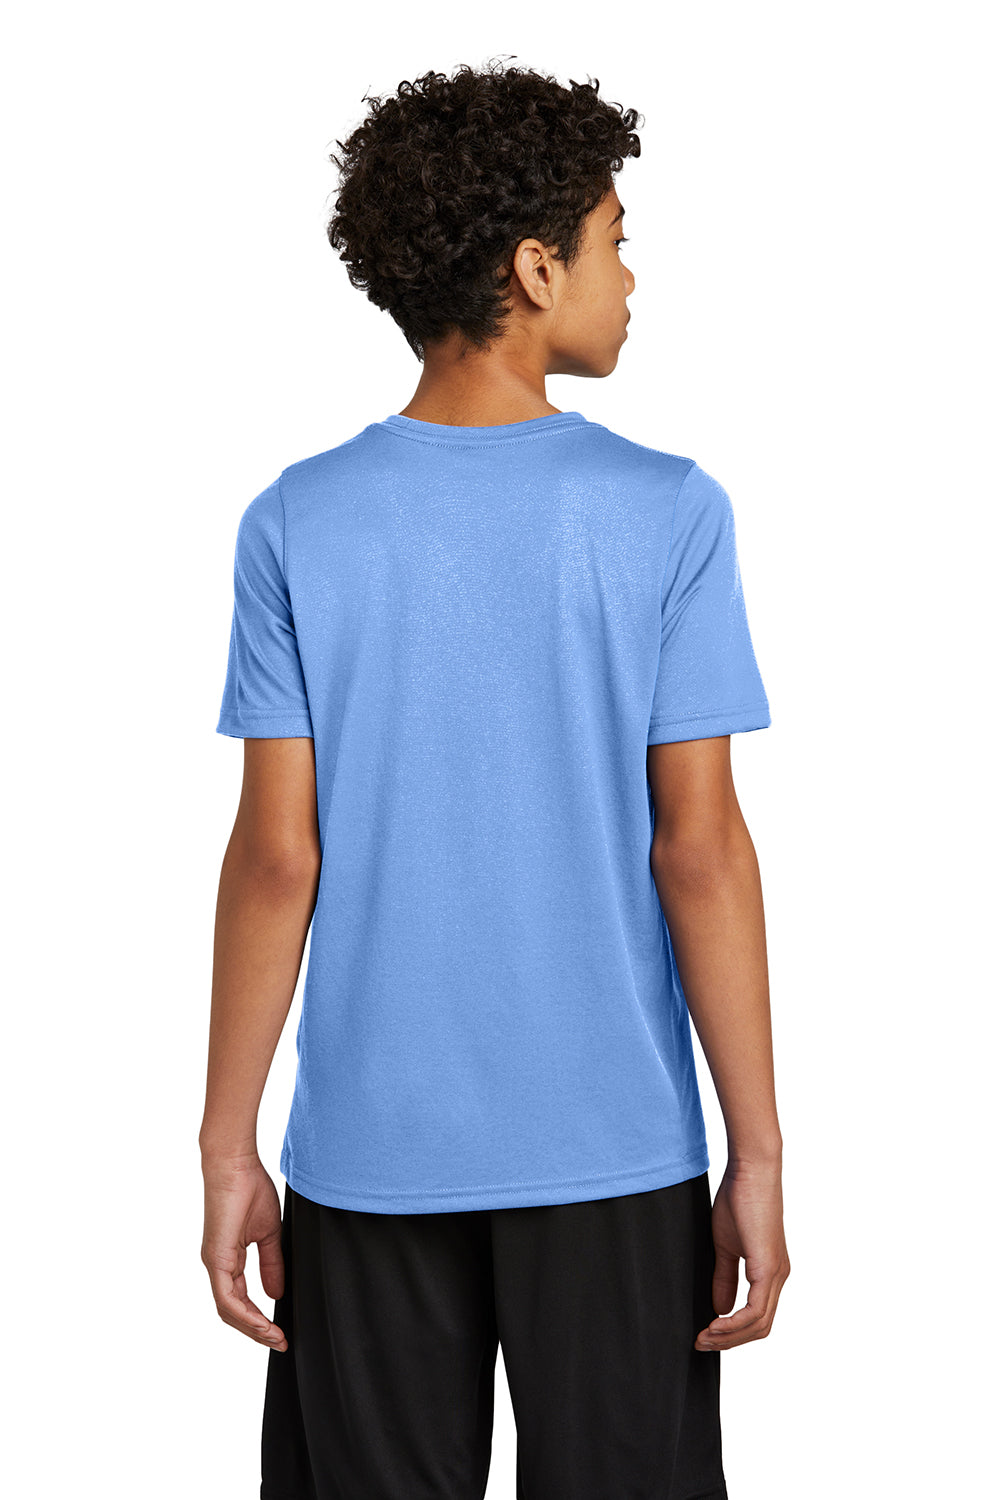 Nike NKDX8787 Youth rLegend Dri-Fit Moisture Wicking Short Sleeve Crewneck T-Shirt Valor Blue Model Back